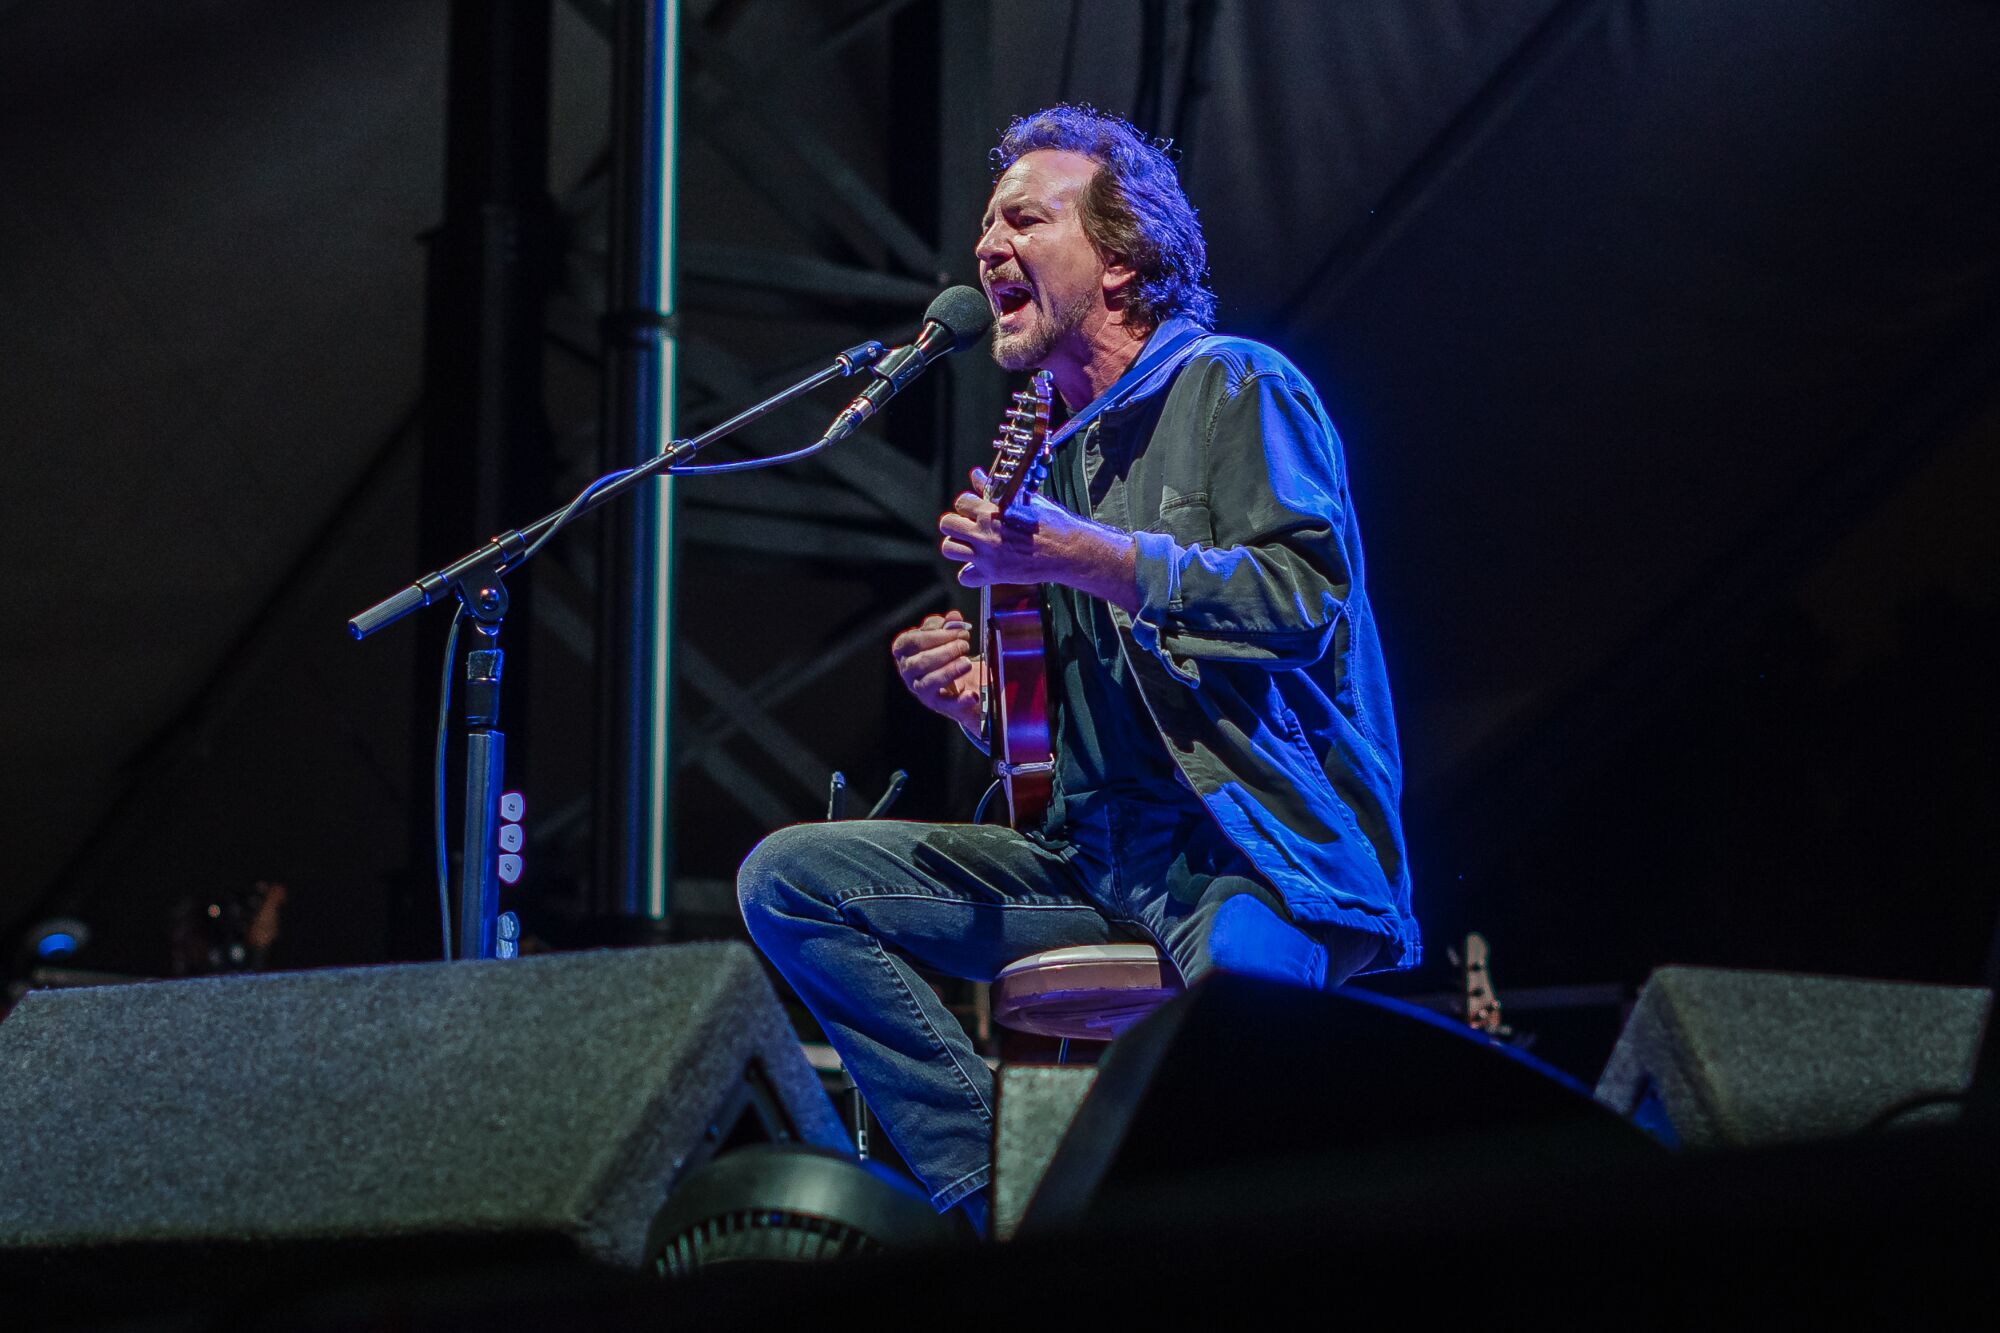 Singer, songwriter Eddie Vedder performs on stage at the Ohana Festival on September 25, 2021 in Dana Point, California.